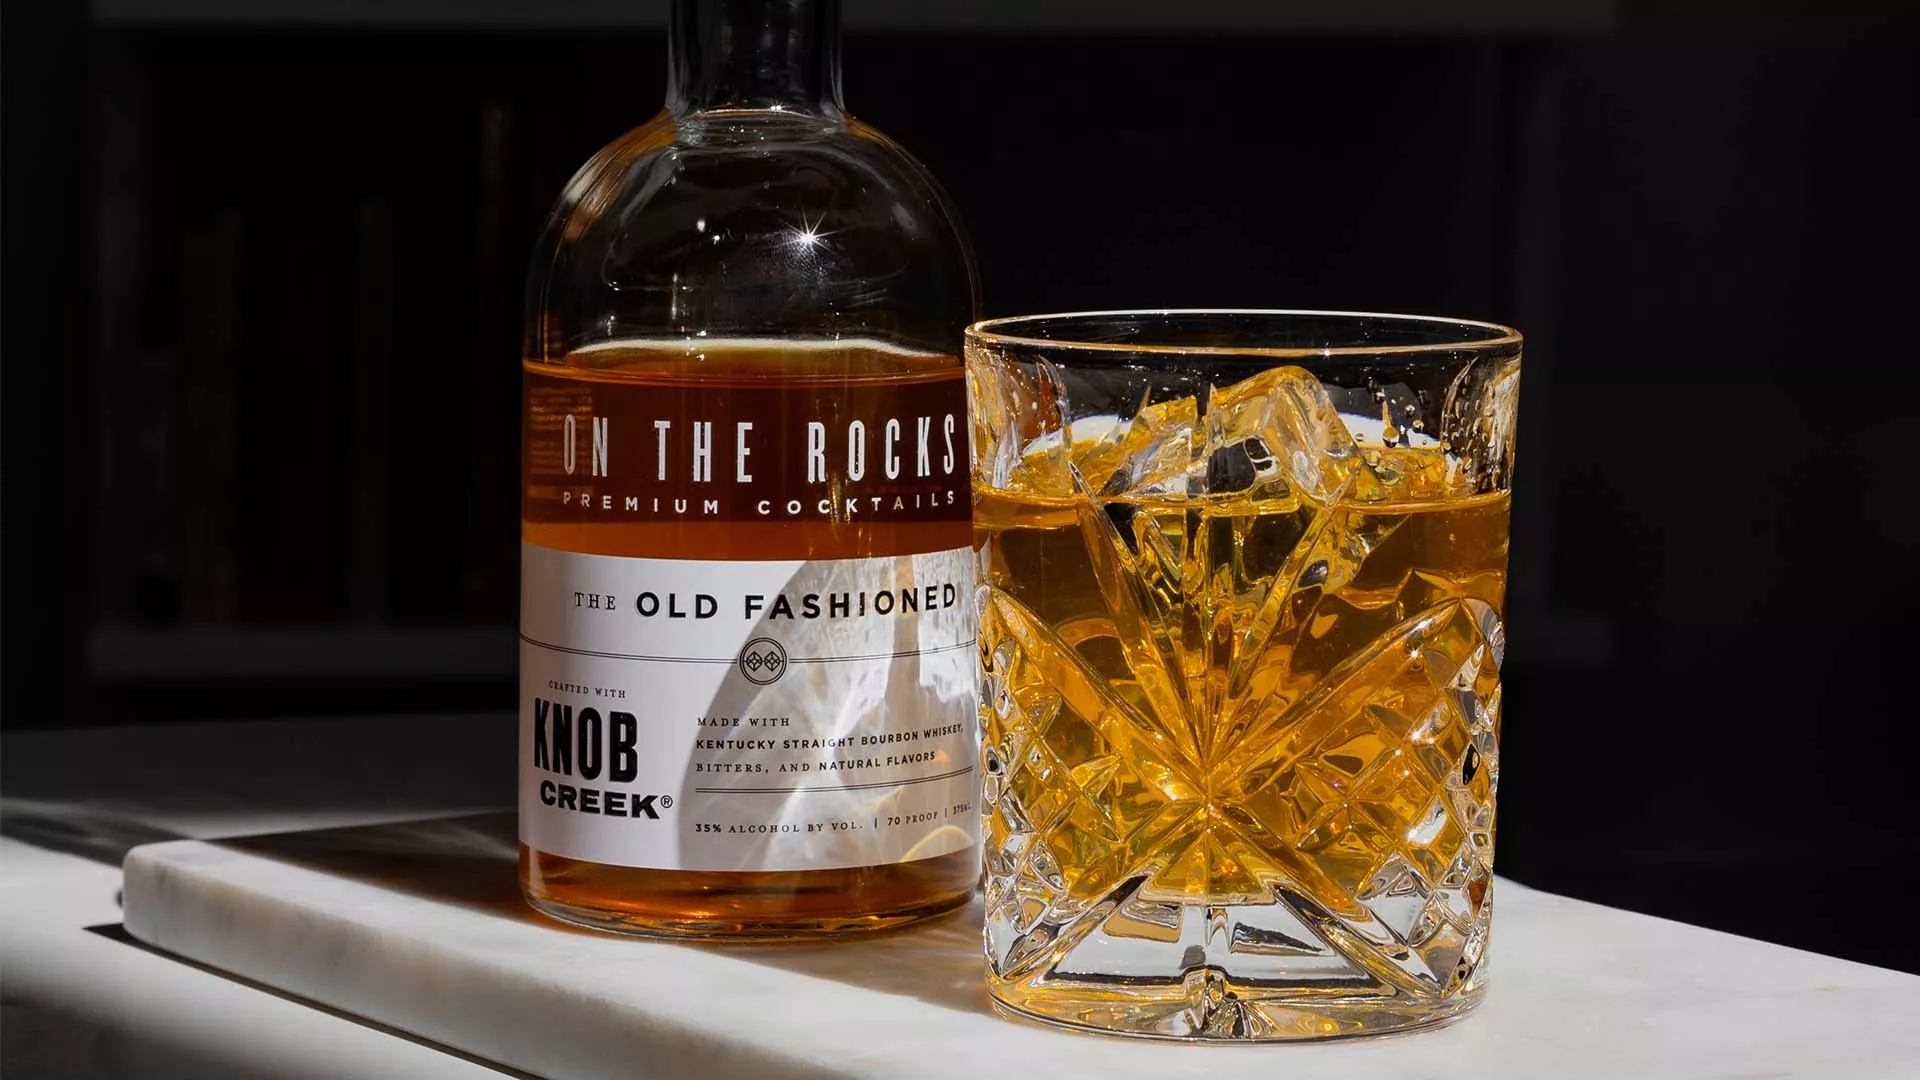 https://www.otrcocktails.com/sites/default/files/styles/original/public/2022-06/otr-old-fashioned-cocktail-whisky-glass.jpg.webp?itok=PfgotY_G